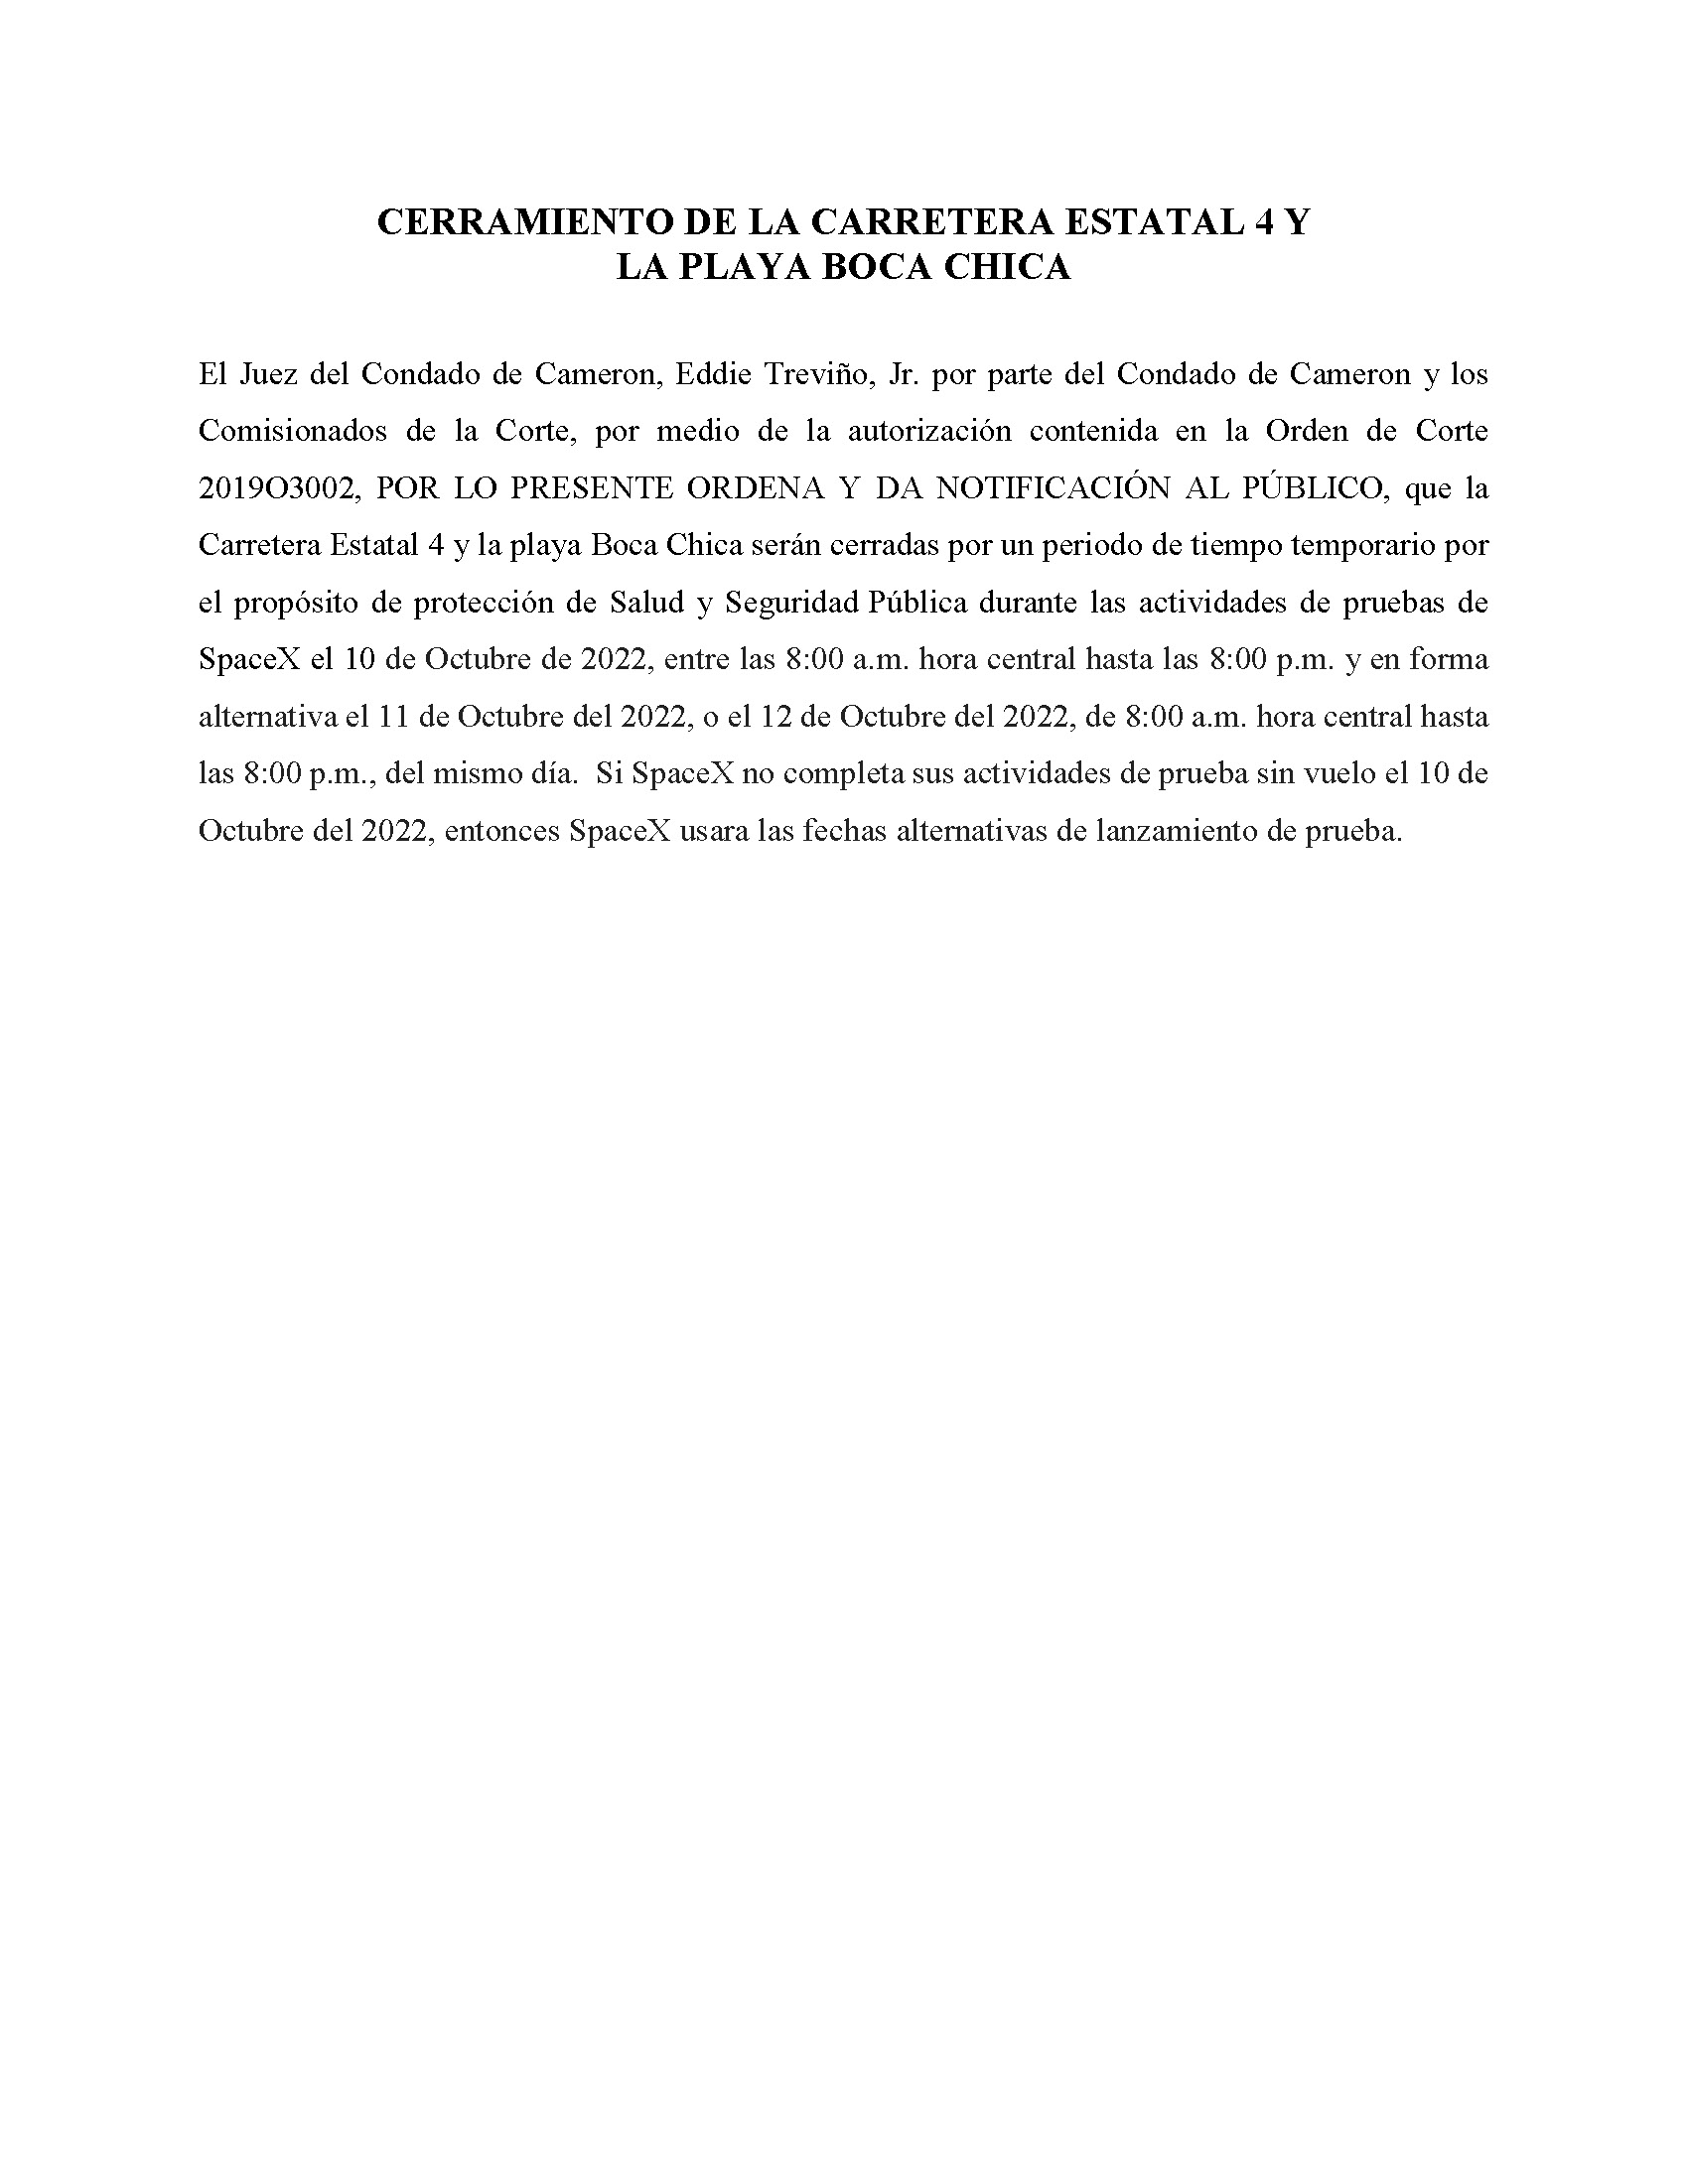 ORDER.CLOSURE OF HIGHWAY 4 Y LA PLAYA BOCA CHICA.SPANISH.10.10.2022